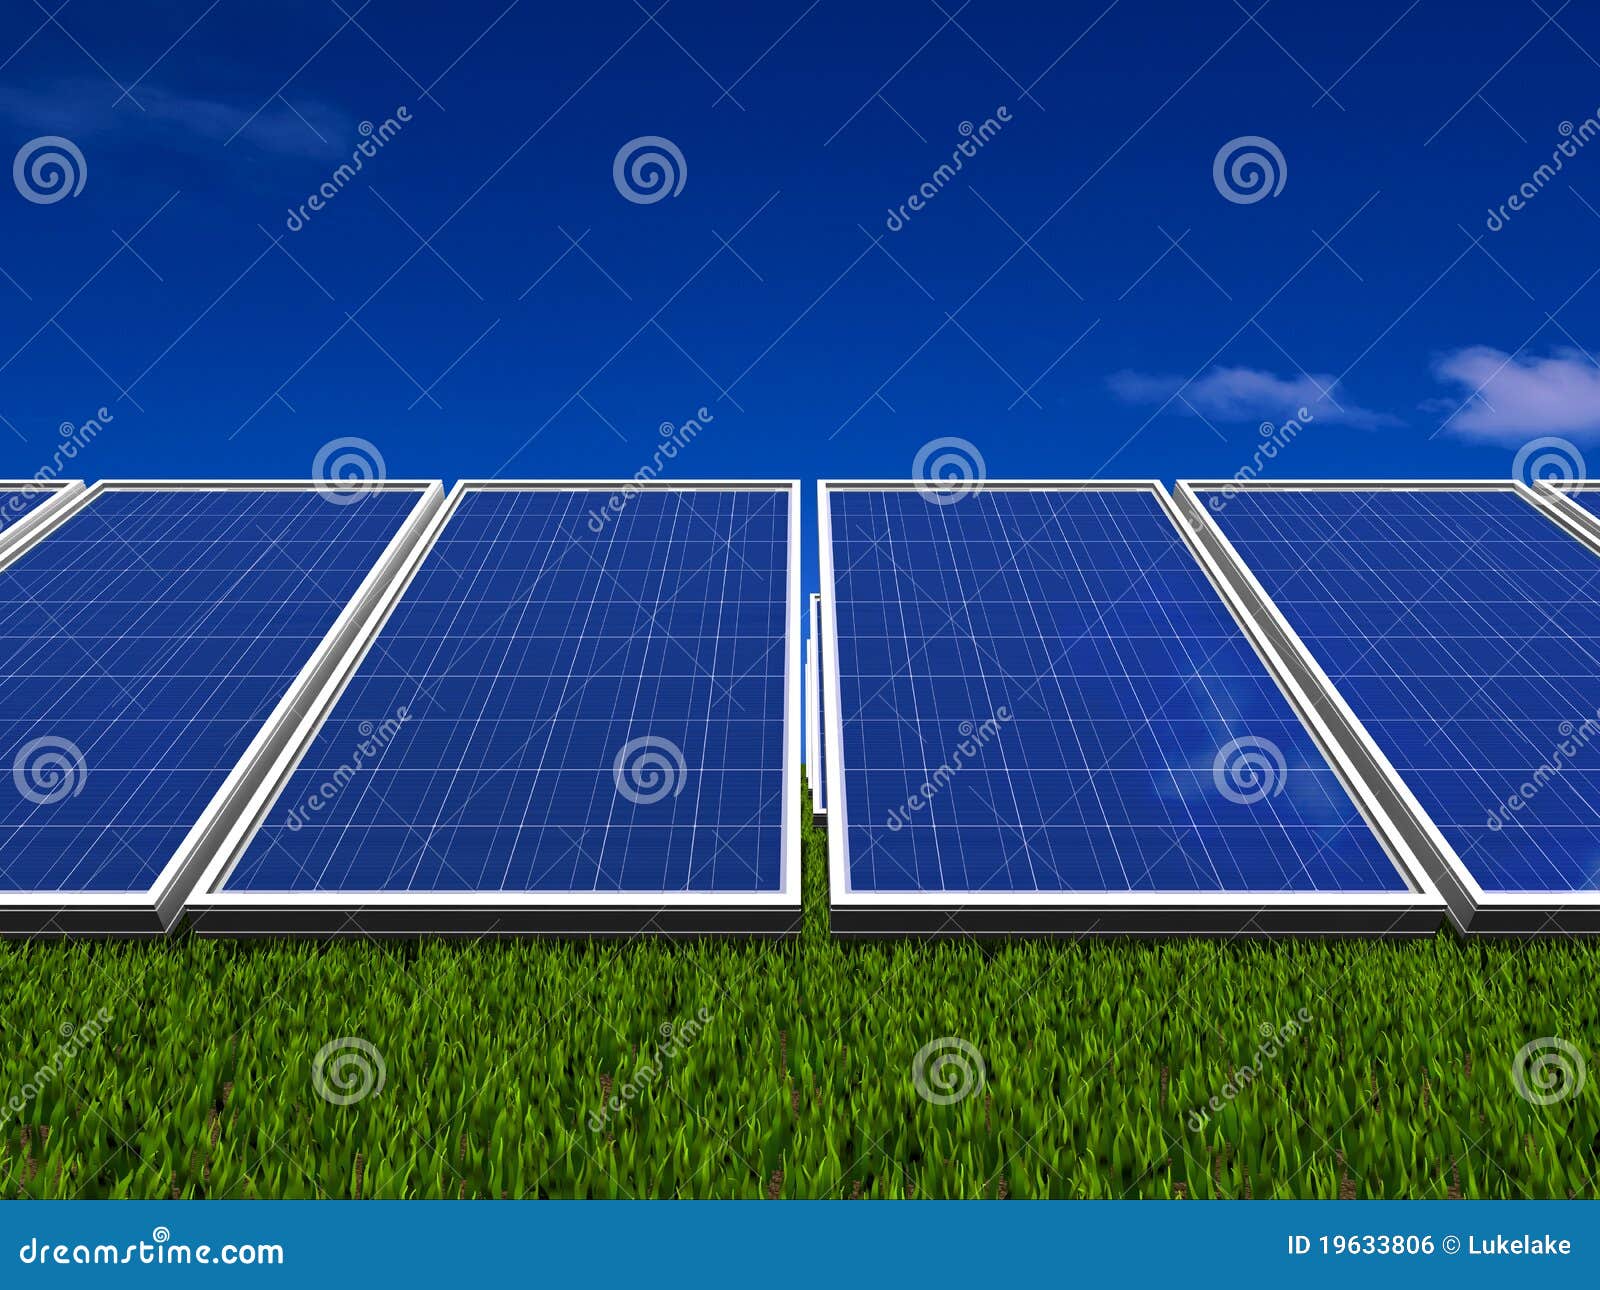 Springs make: Solar power payment plan brisbane